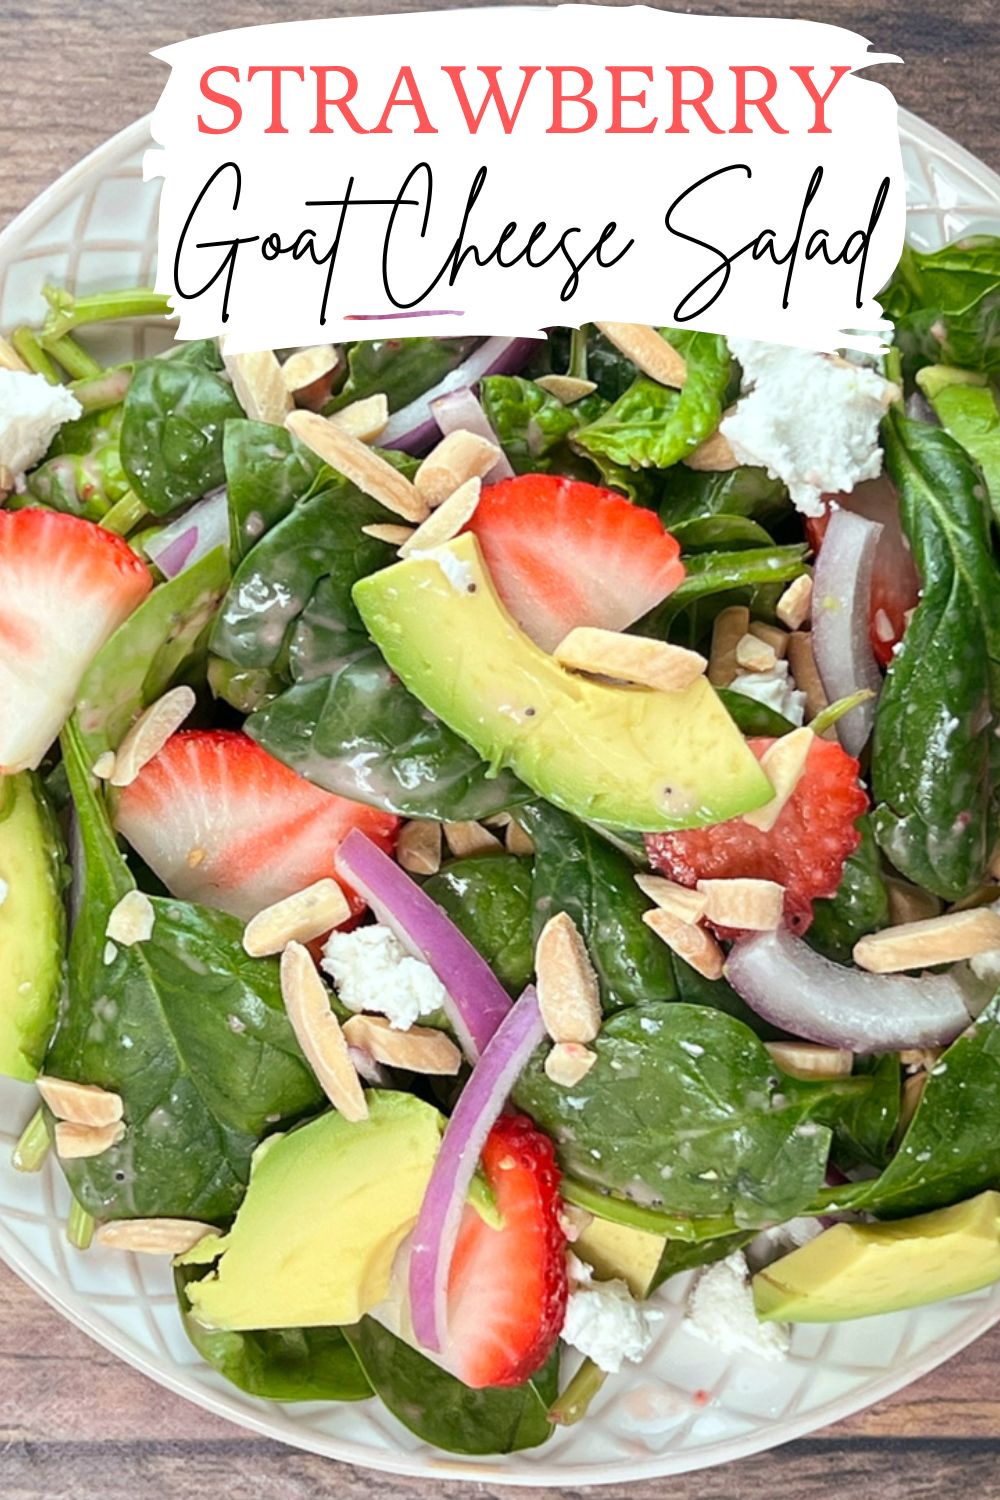 Strawberry Goat Cheese Salad via @preventionrd